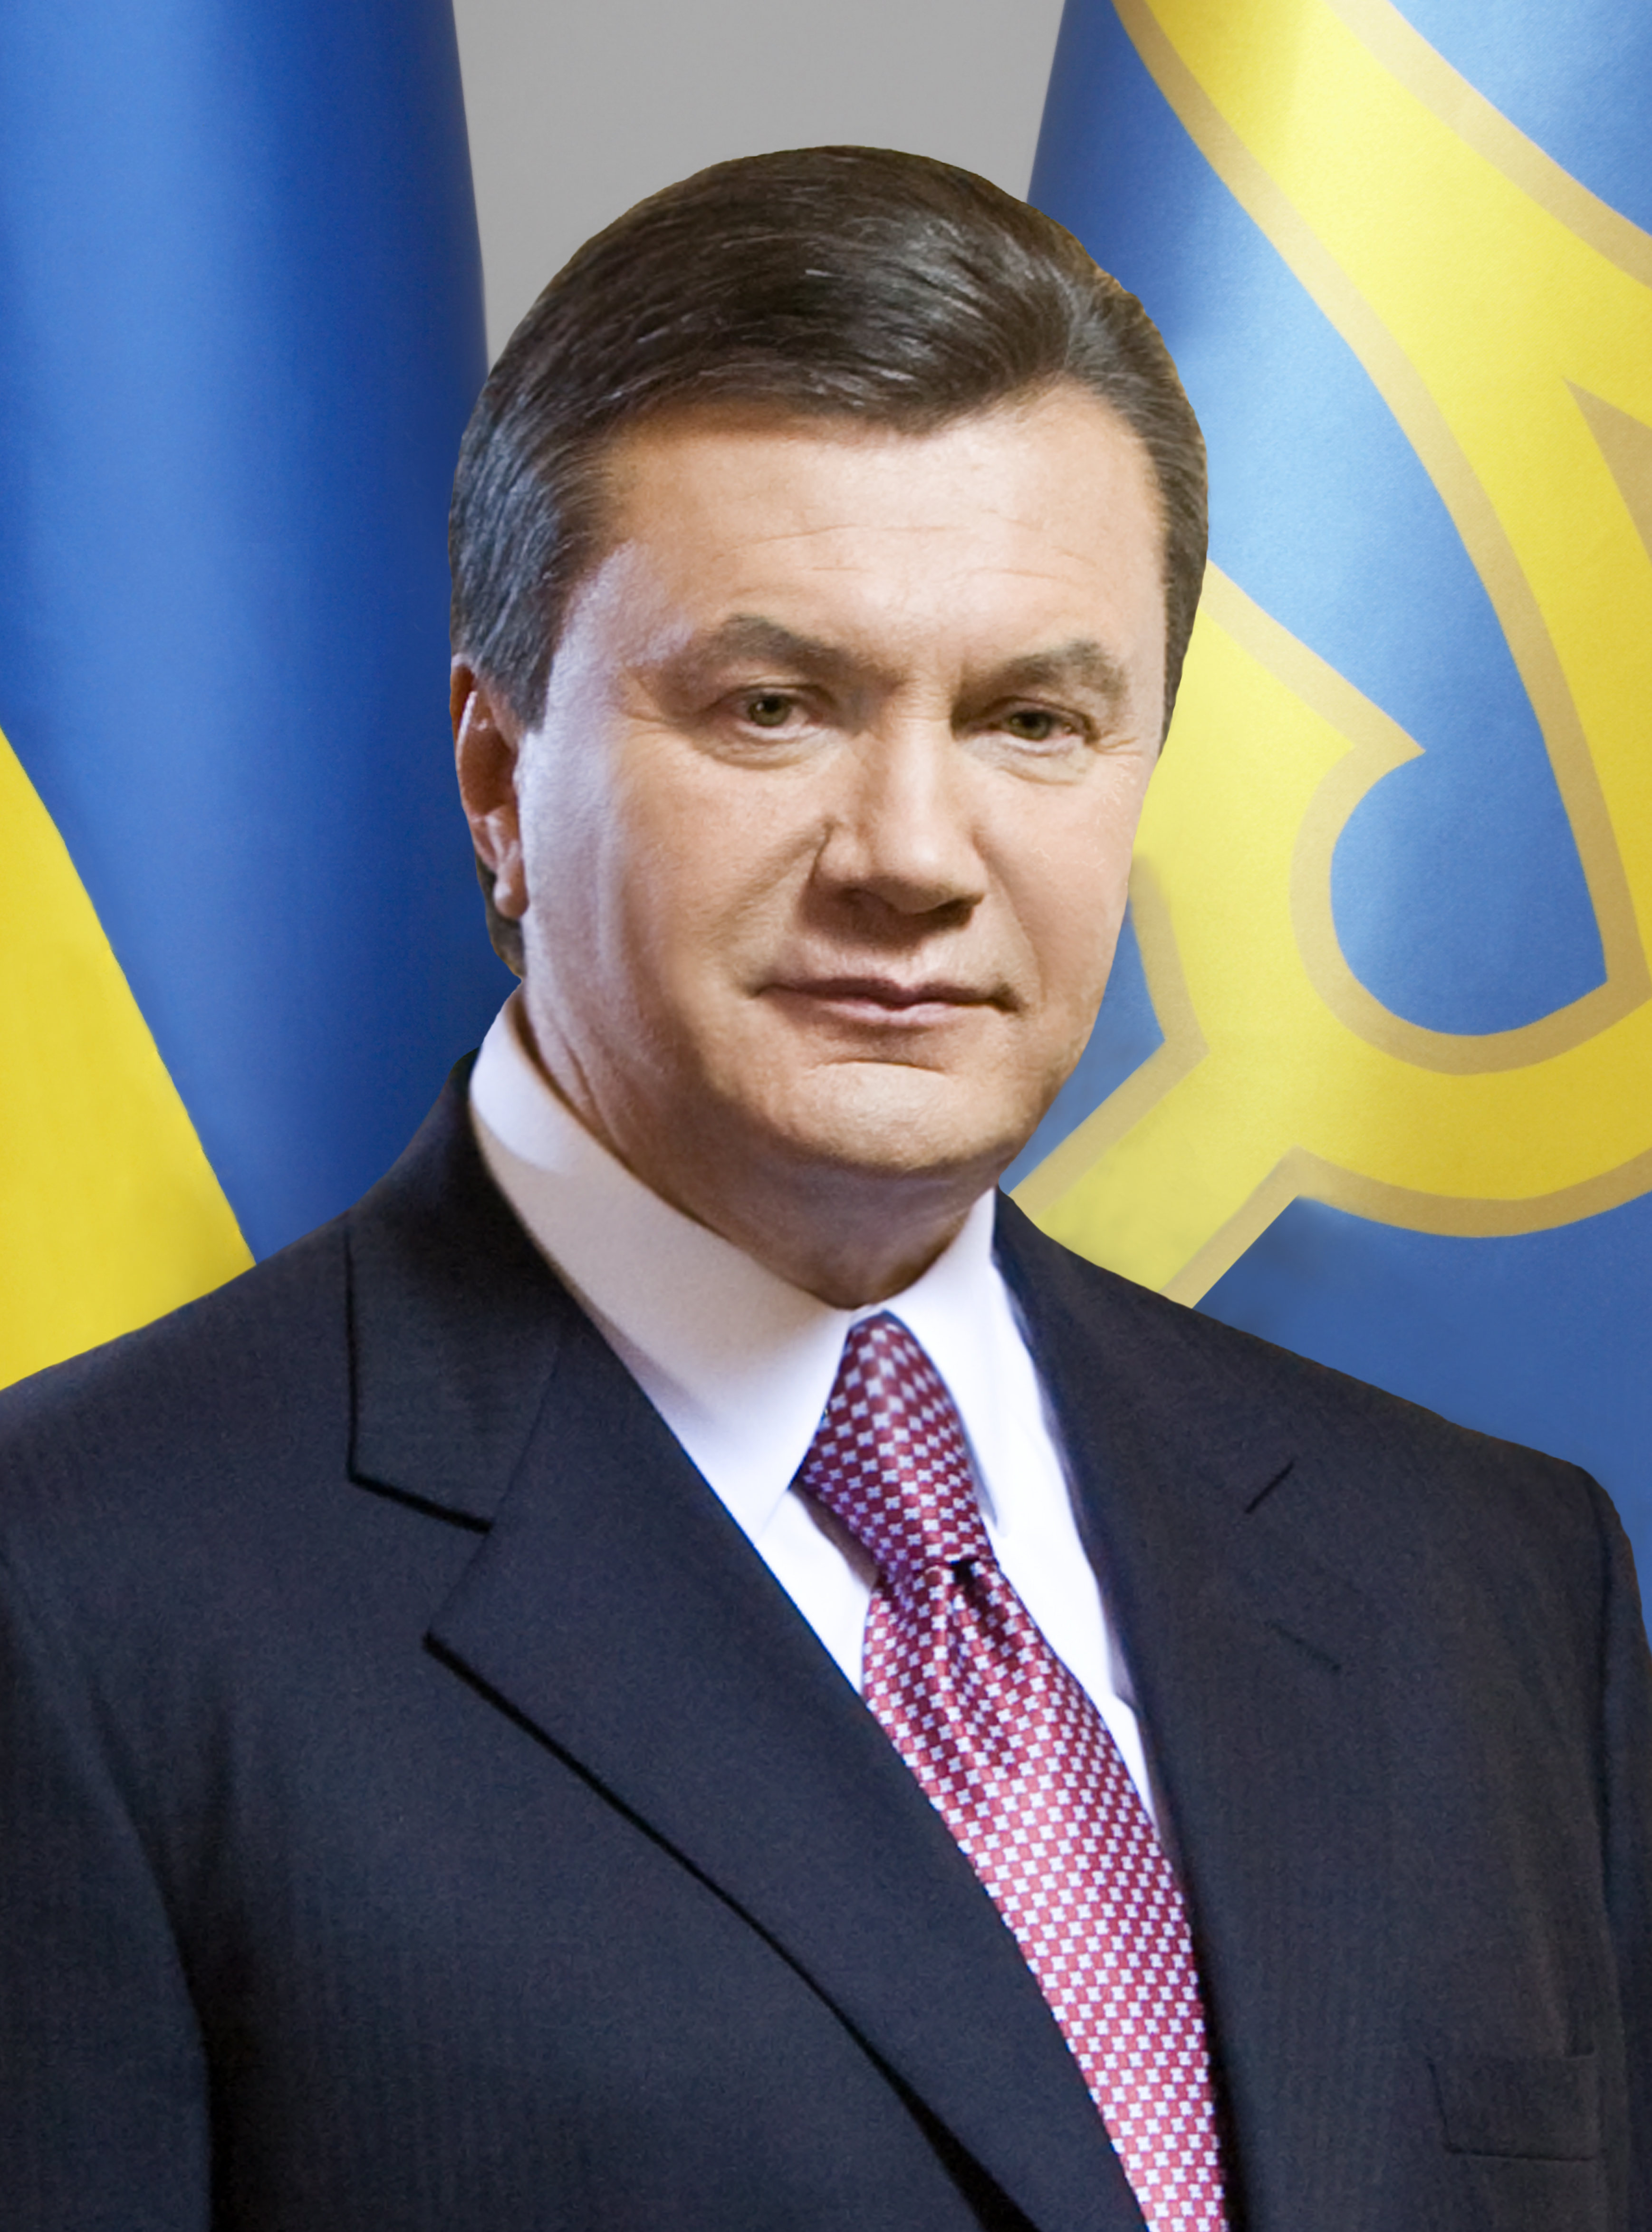 Равнение на Брежнева: сколько орденов у Януковича и компании?